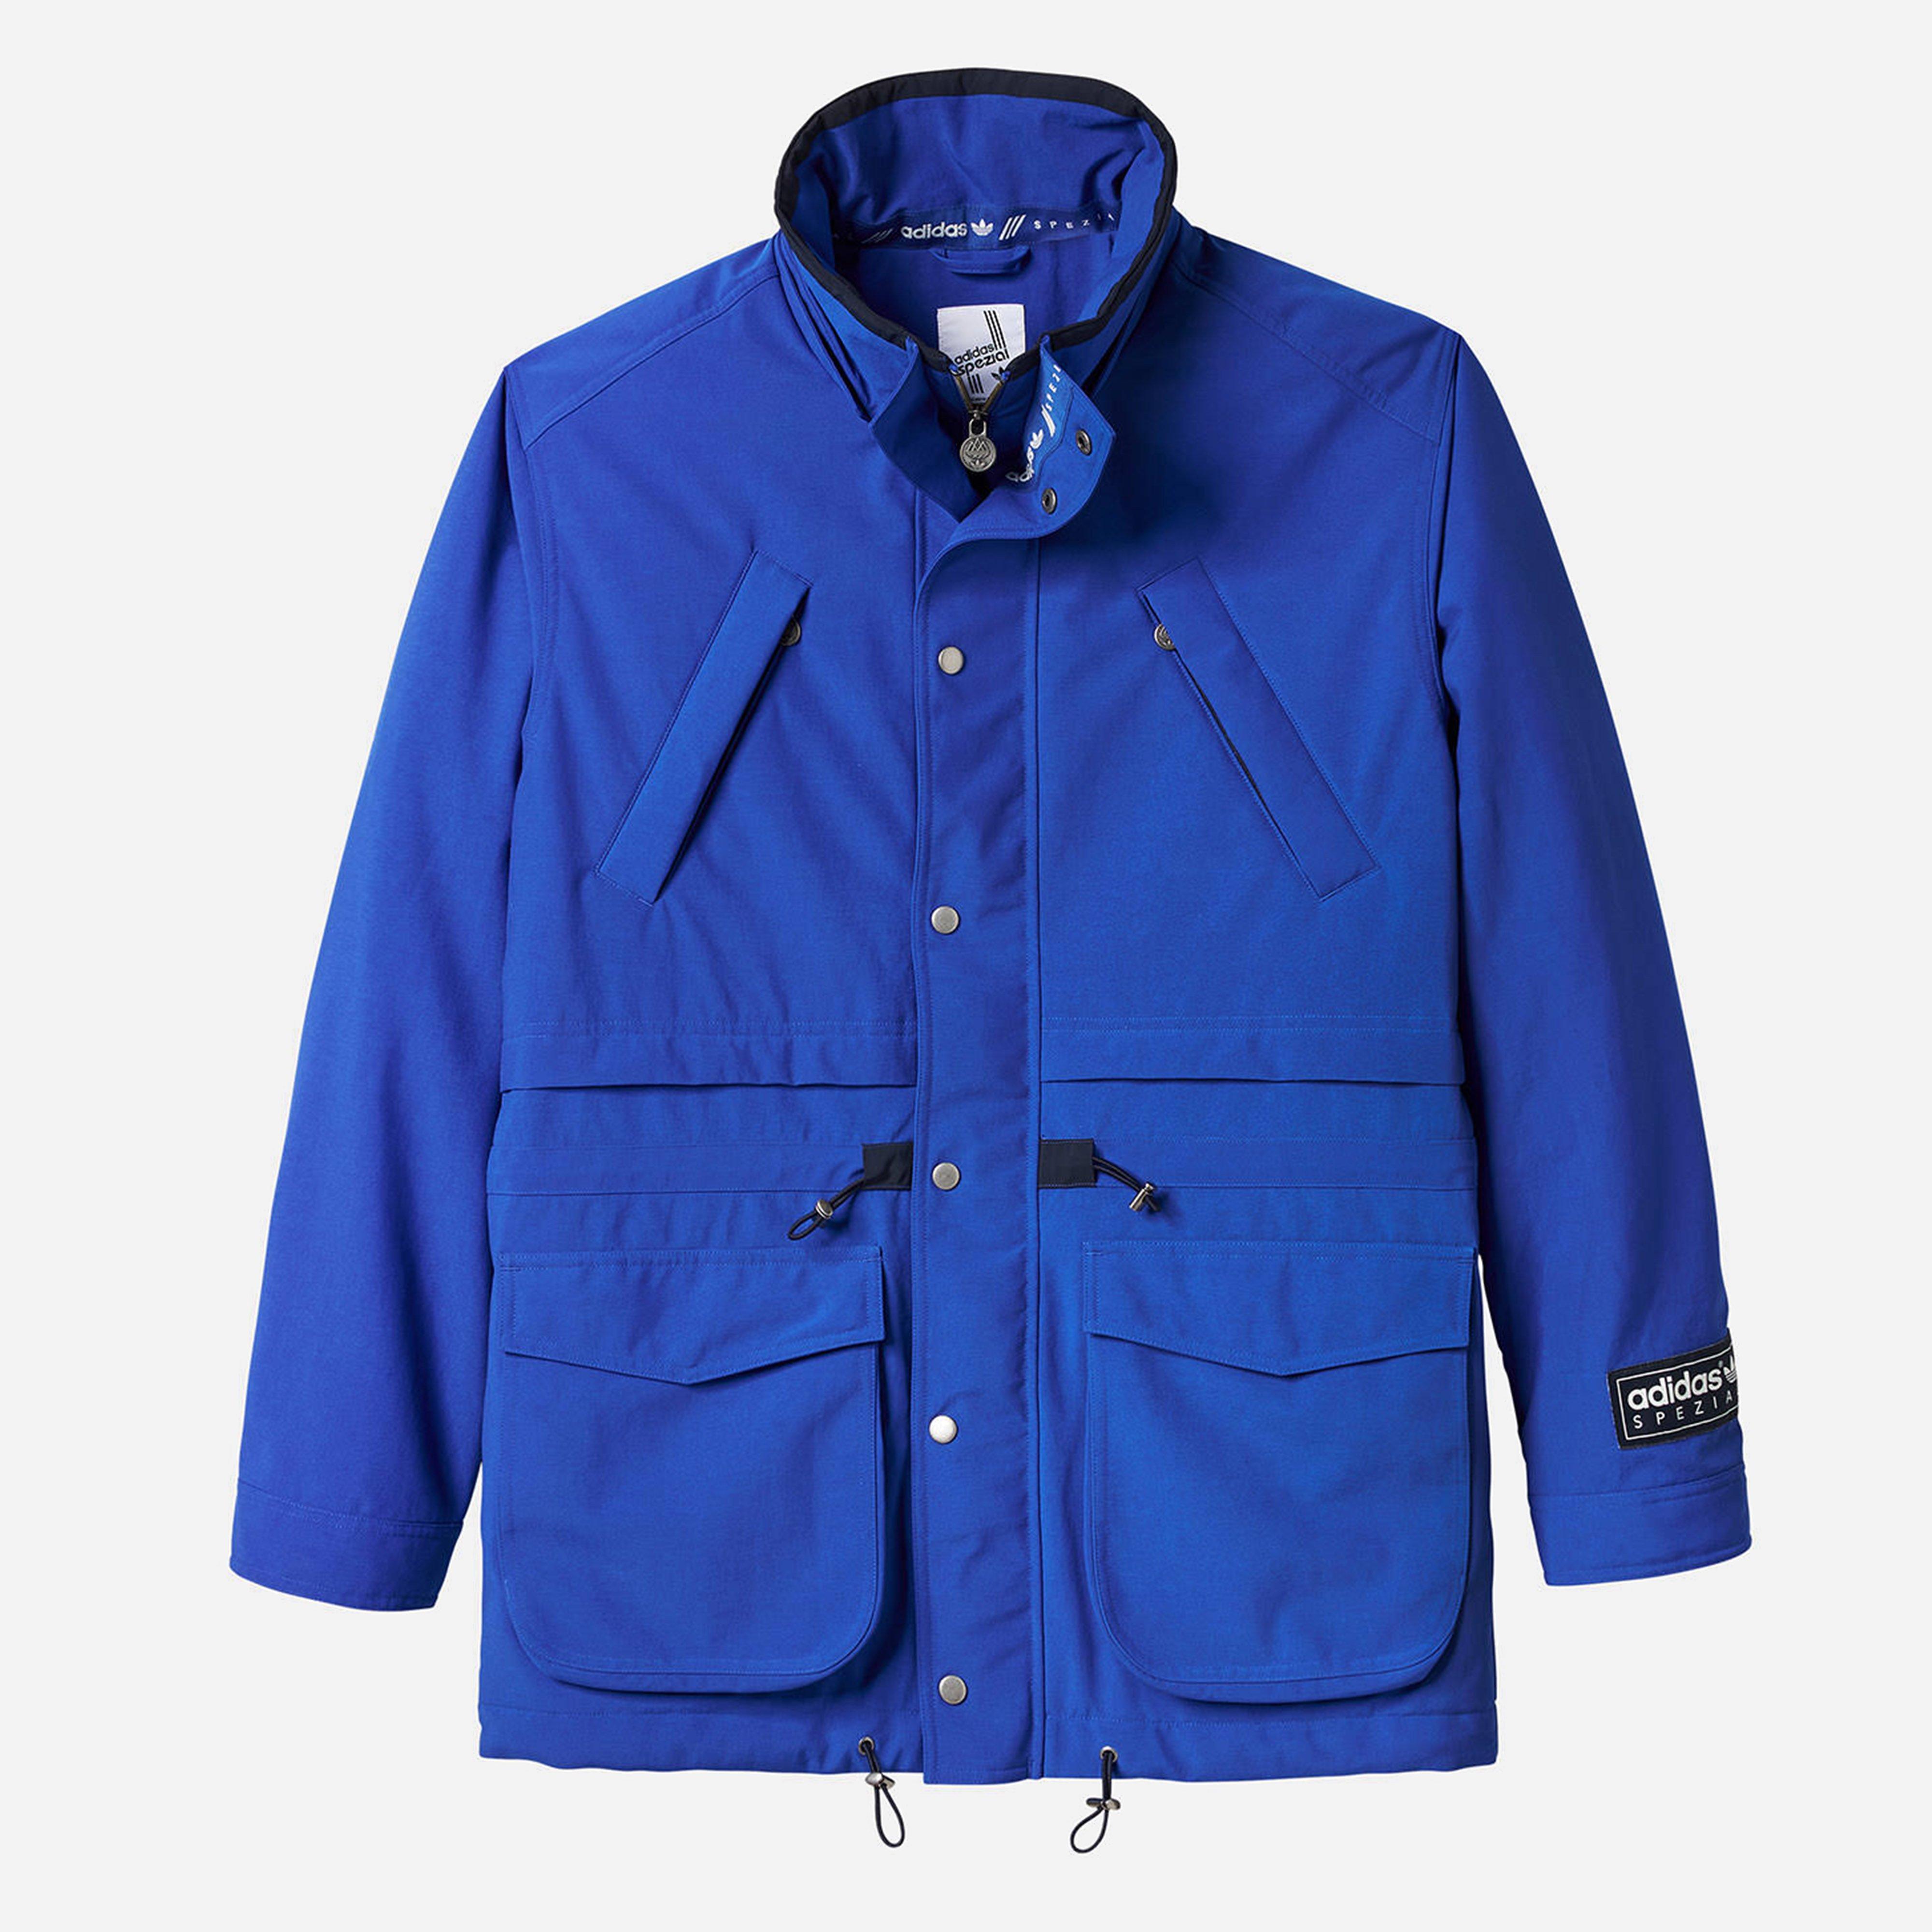 adidas spezial blue jacket